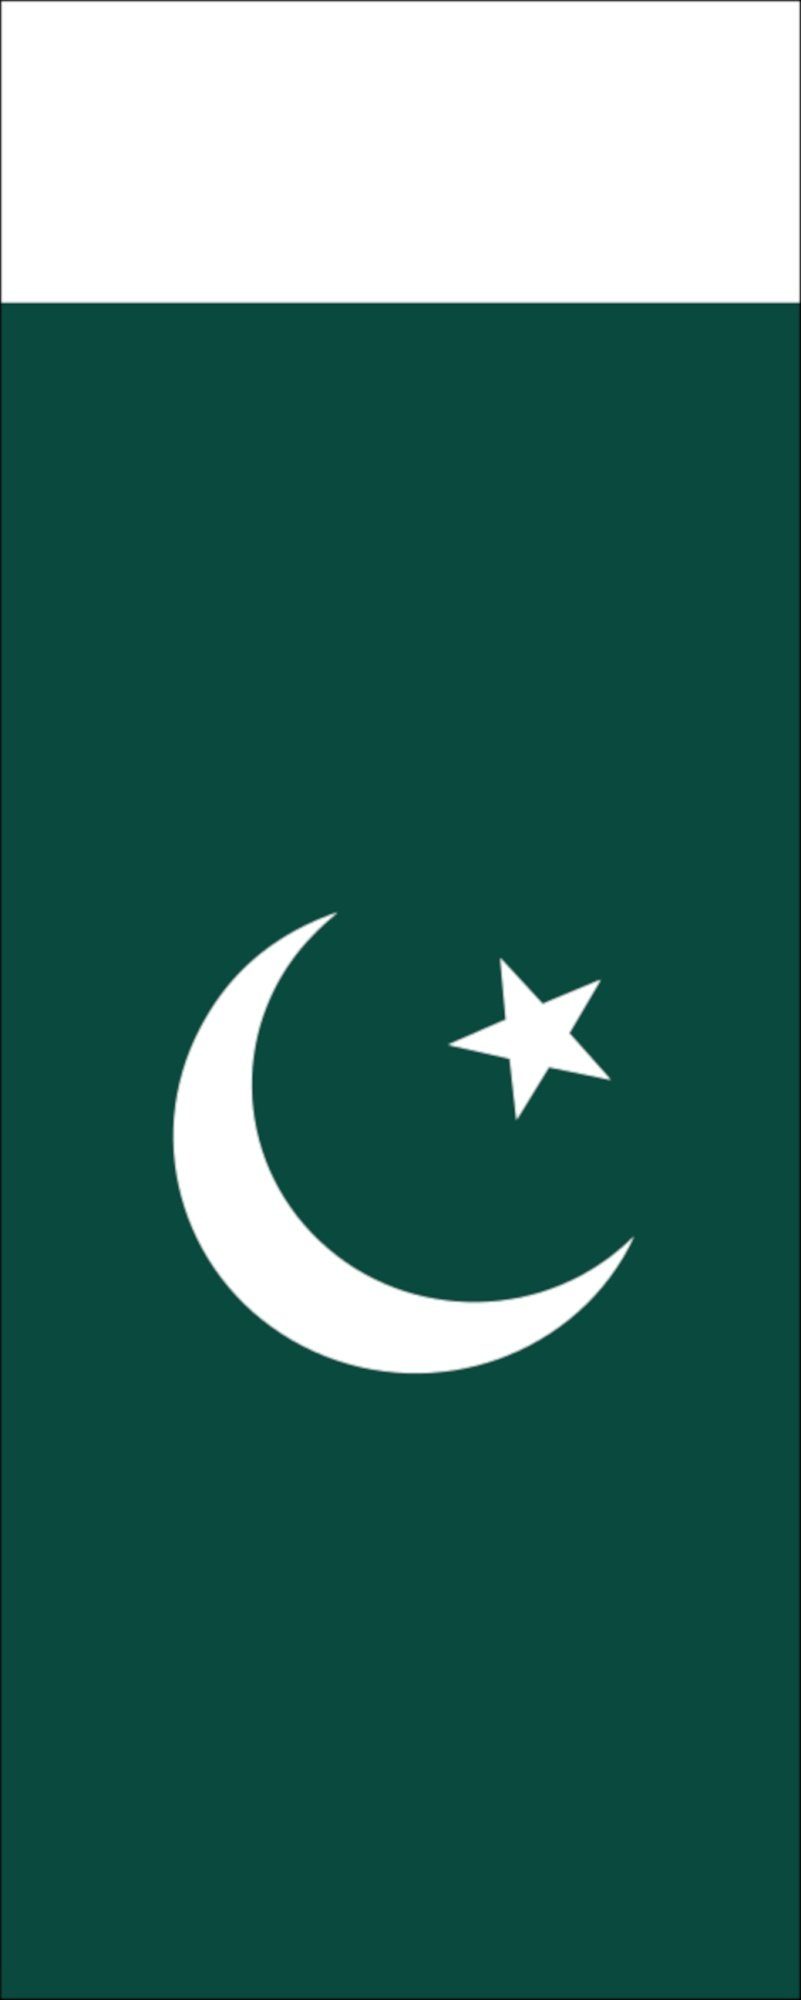 flaggenmeer Flagge Flagge Pakistan 110 g/m² Hochformat